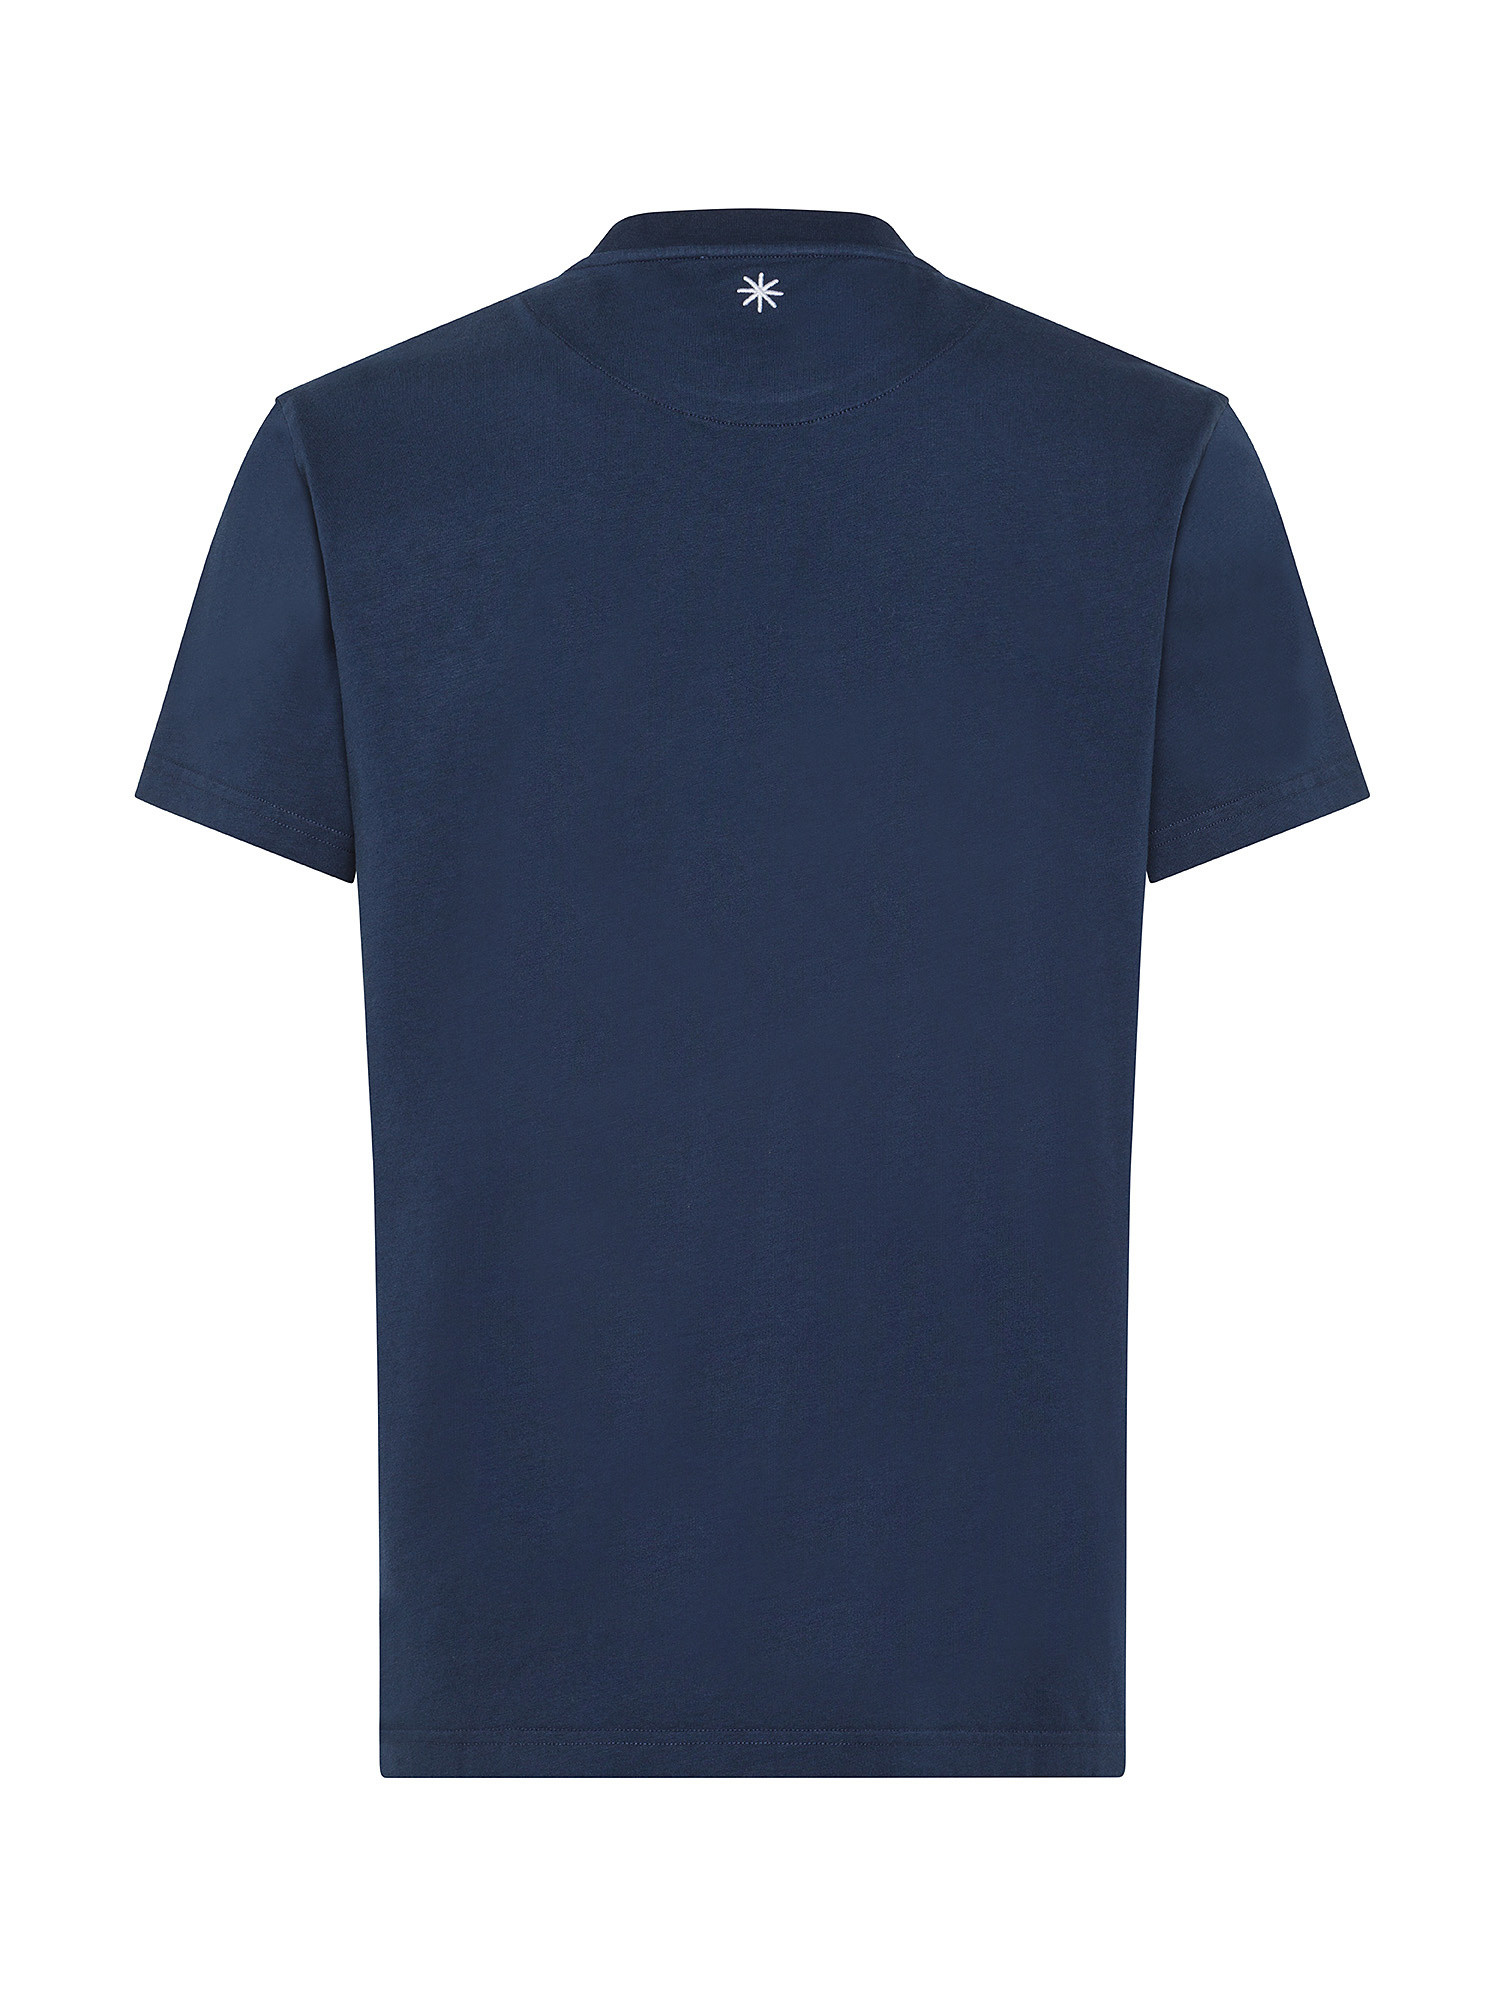 Manuel Ritz - Cotton T-shirt, Dark Blue, large image number 1